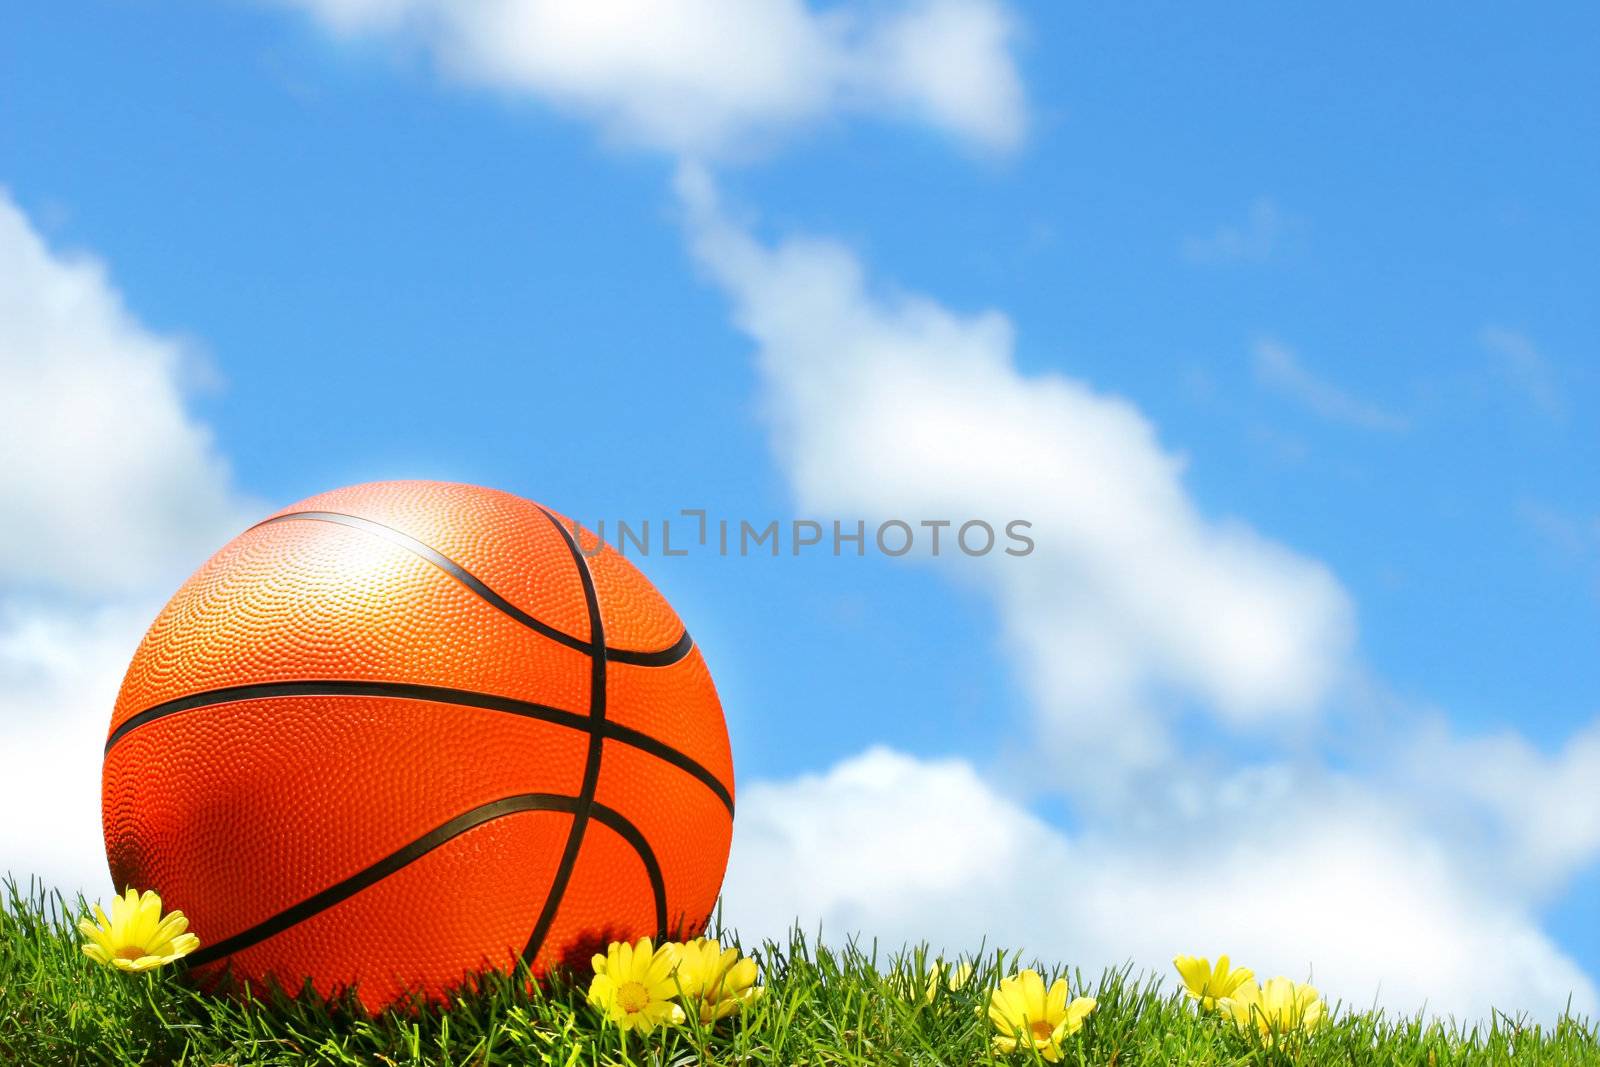 Basketball on the grass against blue sky